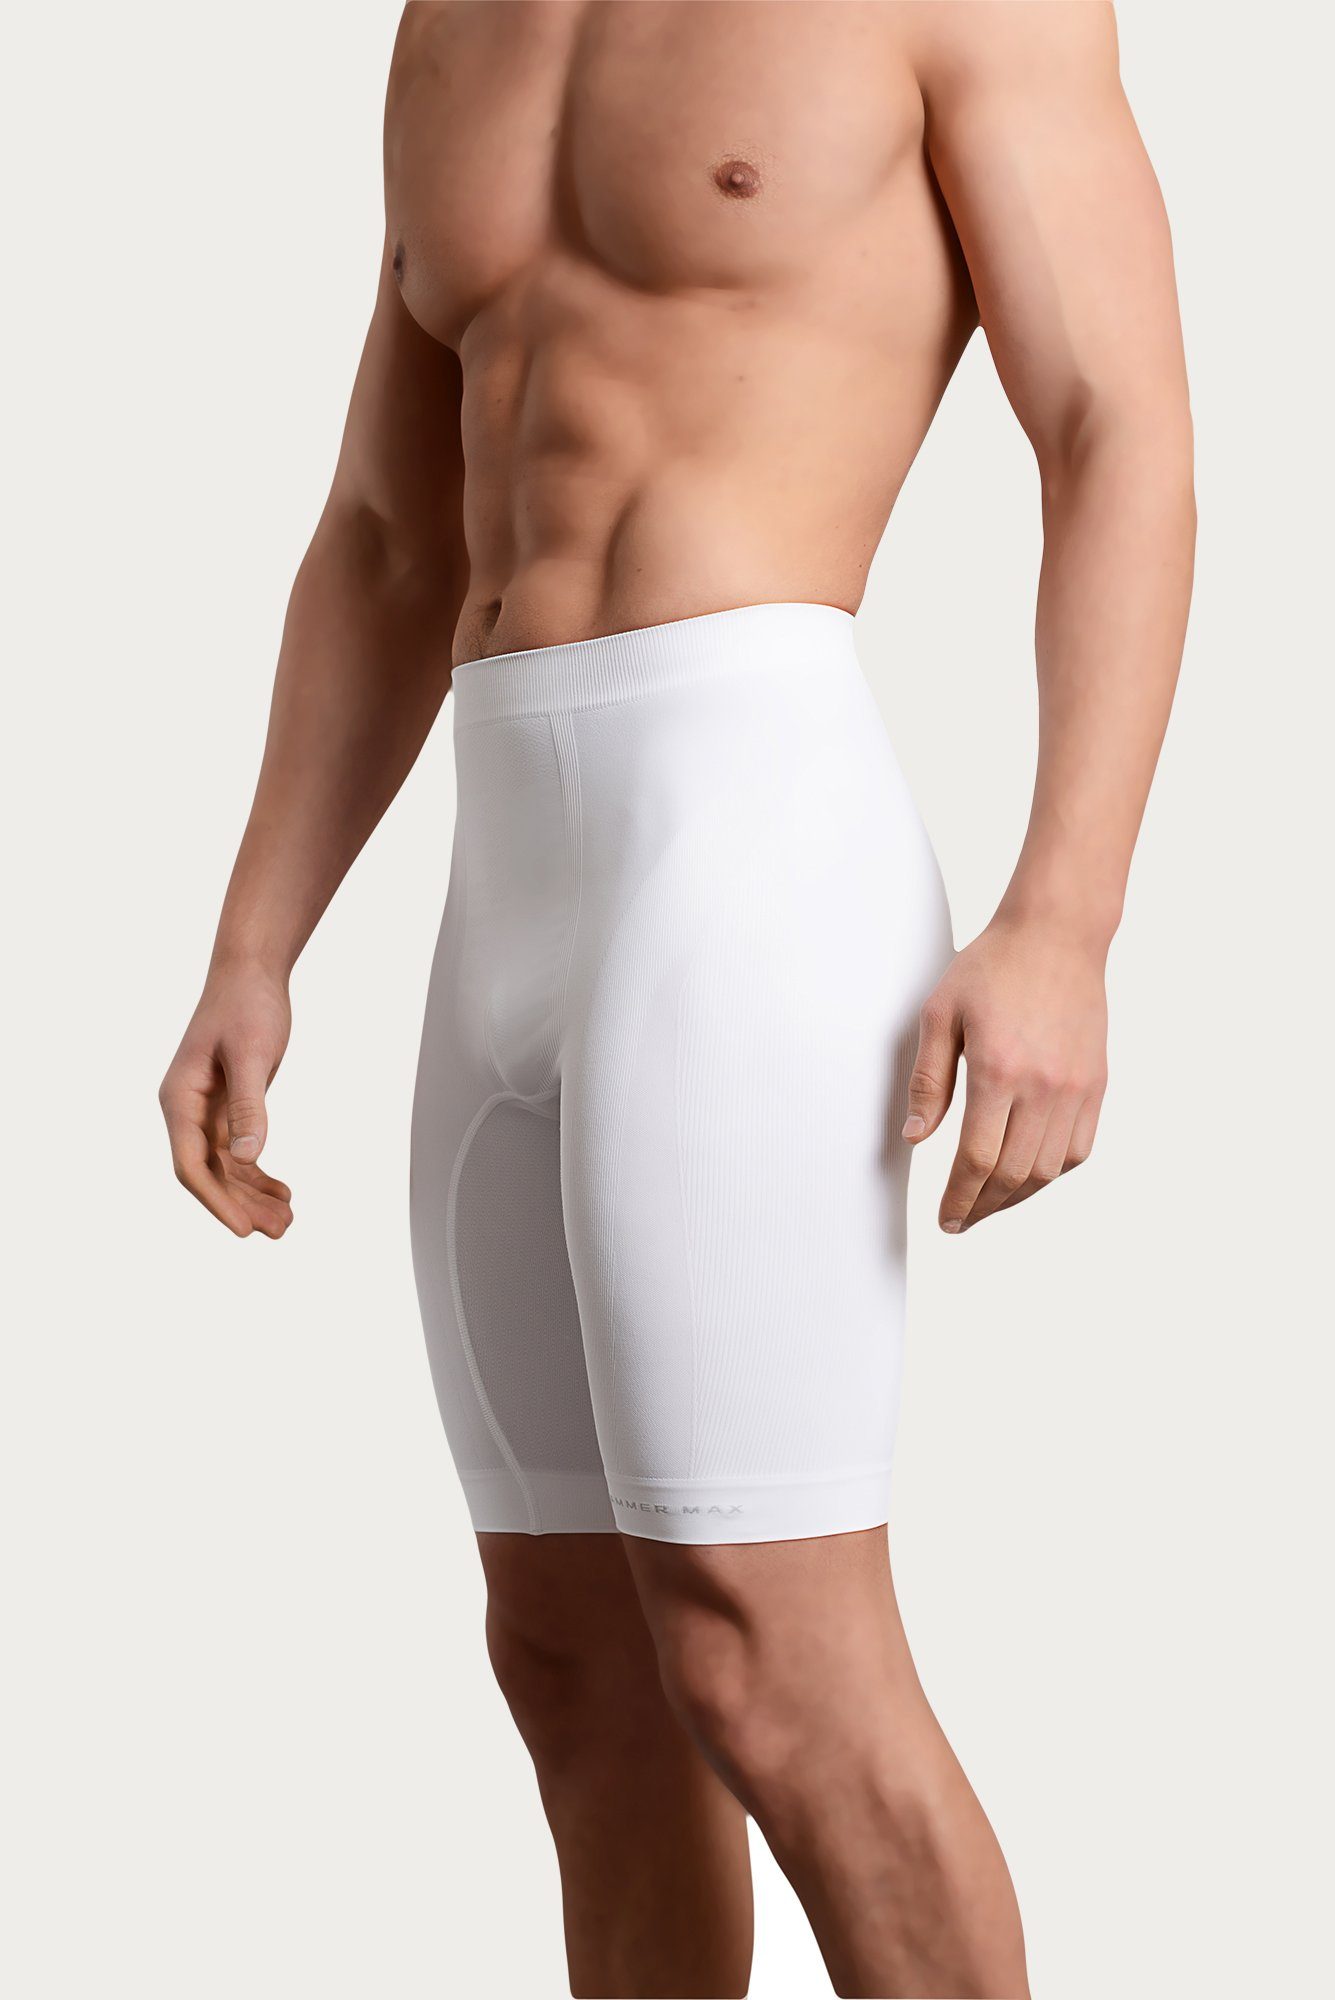 Strammer Max Performance® Trainingsshorts Compression atmungsaktives Shorts Shapewear, High Weiß Gewebe Tech